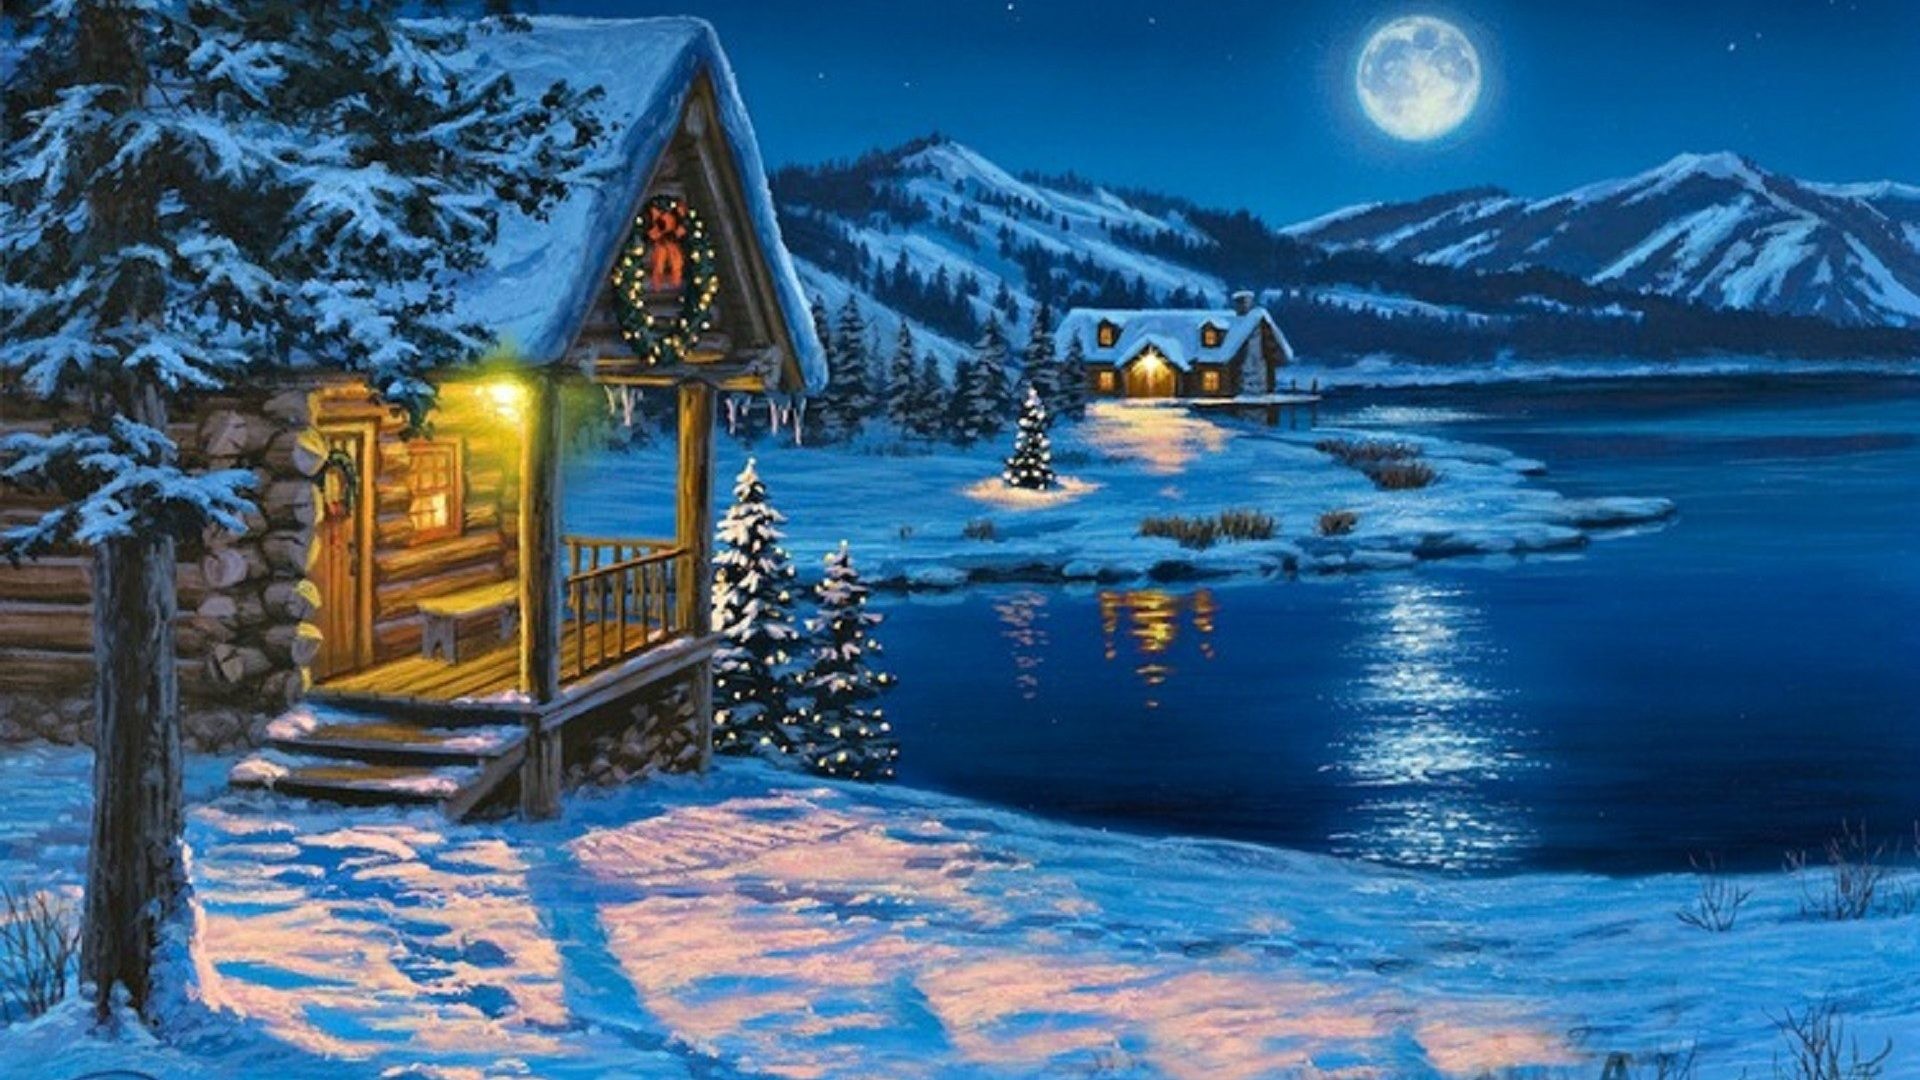 1920x1080 beautiful-christmas-and-winter-wallpapers-for-your-desktop.jpg  (JPEG-afbeelding, 1920 Ã 1080 pixels) - Geschaald (66%) | Christmas & Solar  | Pinterest